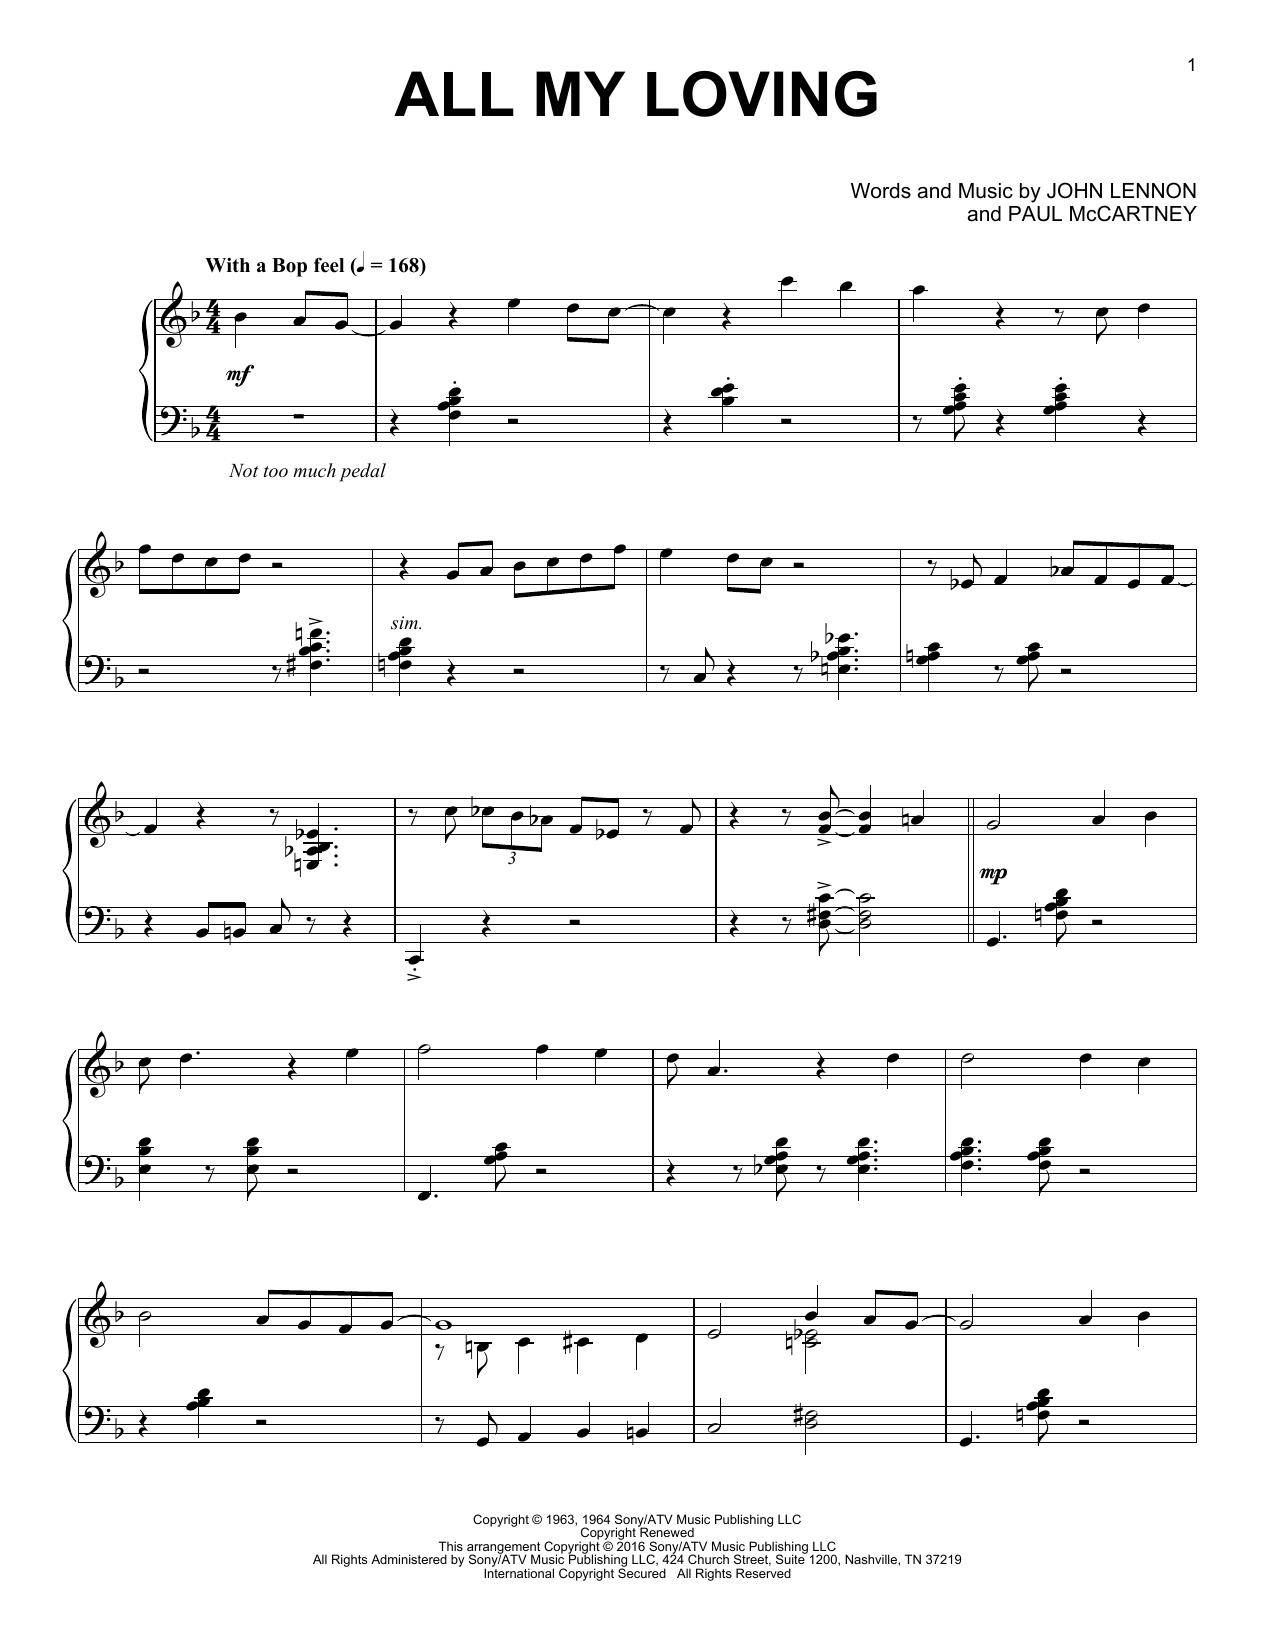 The Beatles "All My Loving [Jazz version]" Sheet Music PDF Notes, Chords | Score Book – Melody, Lyrics & Chords Download Printable. SKU: 436226